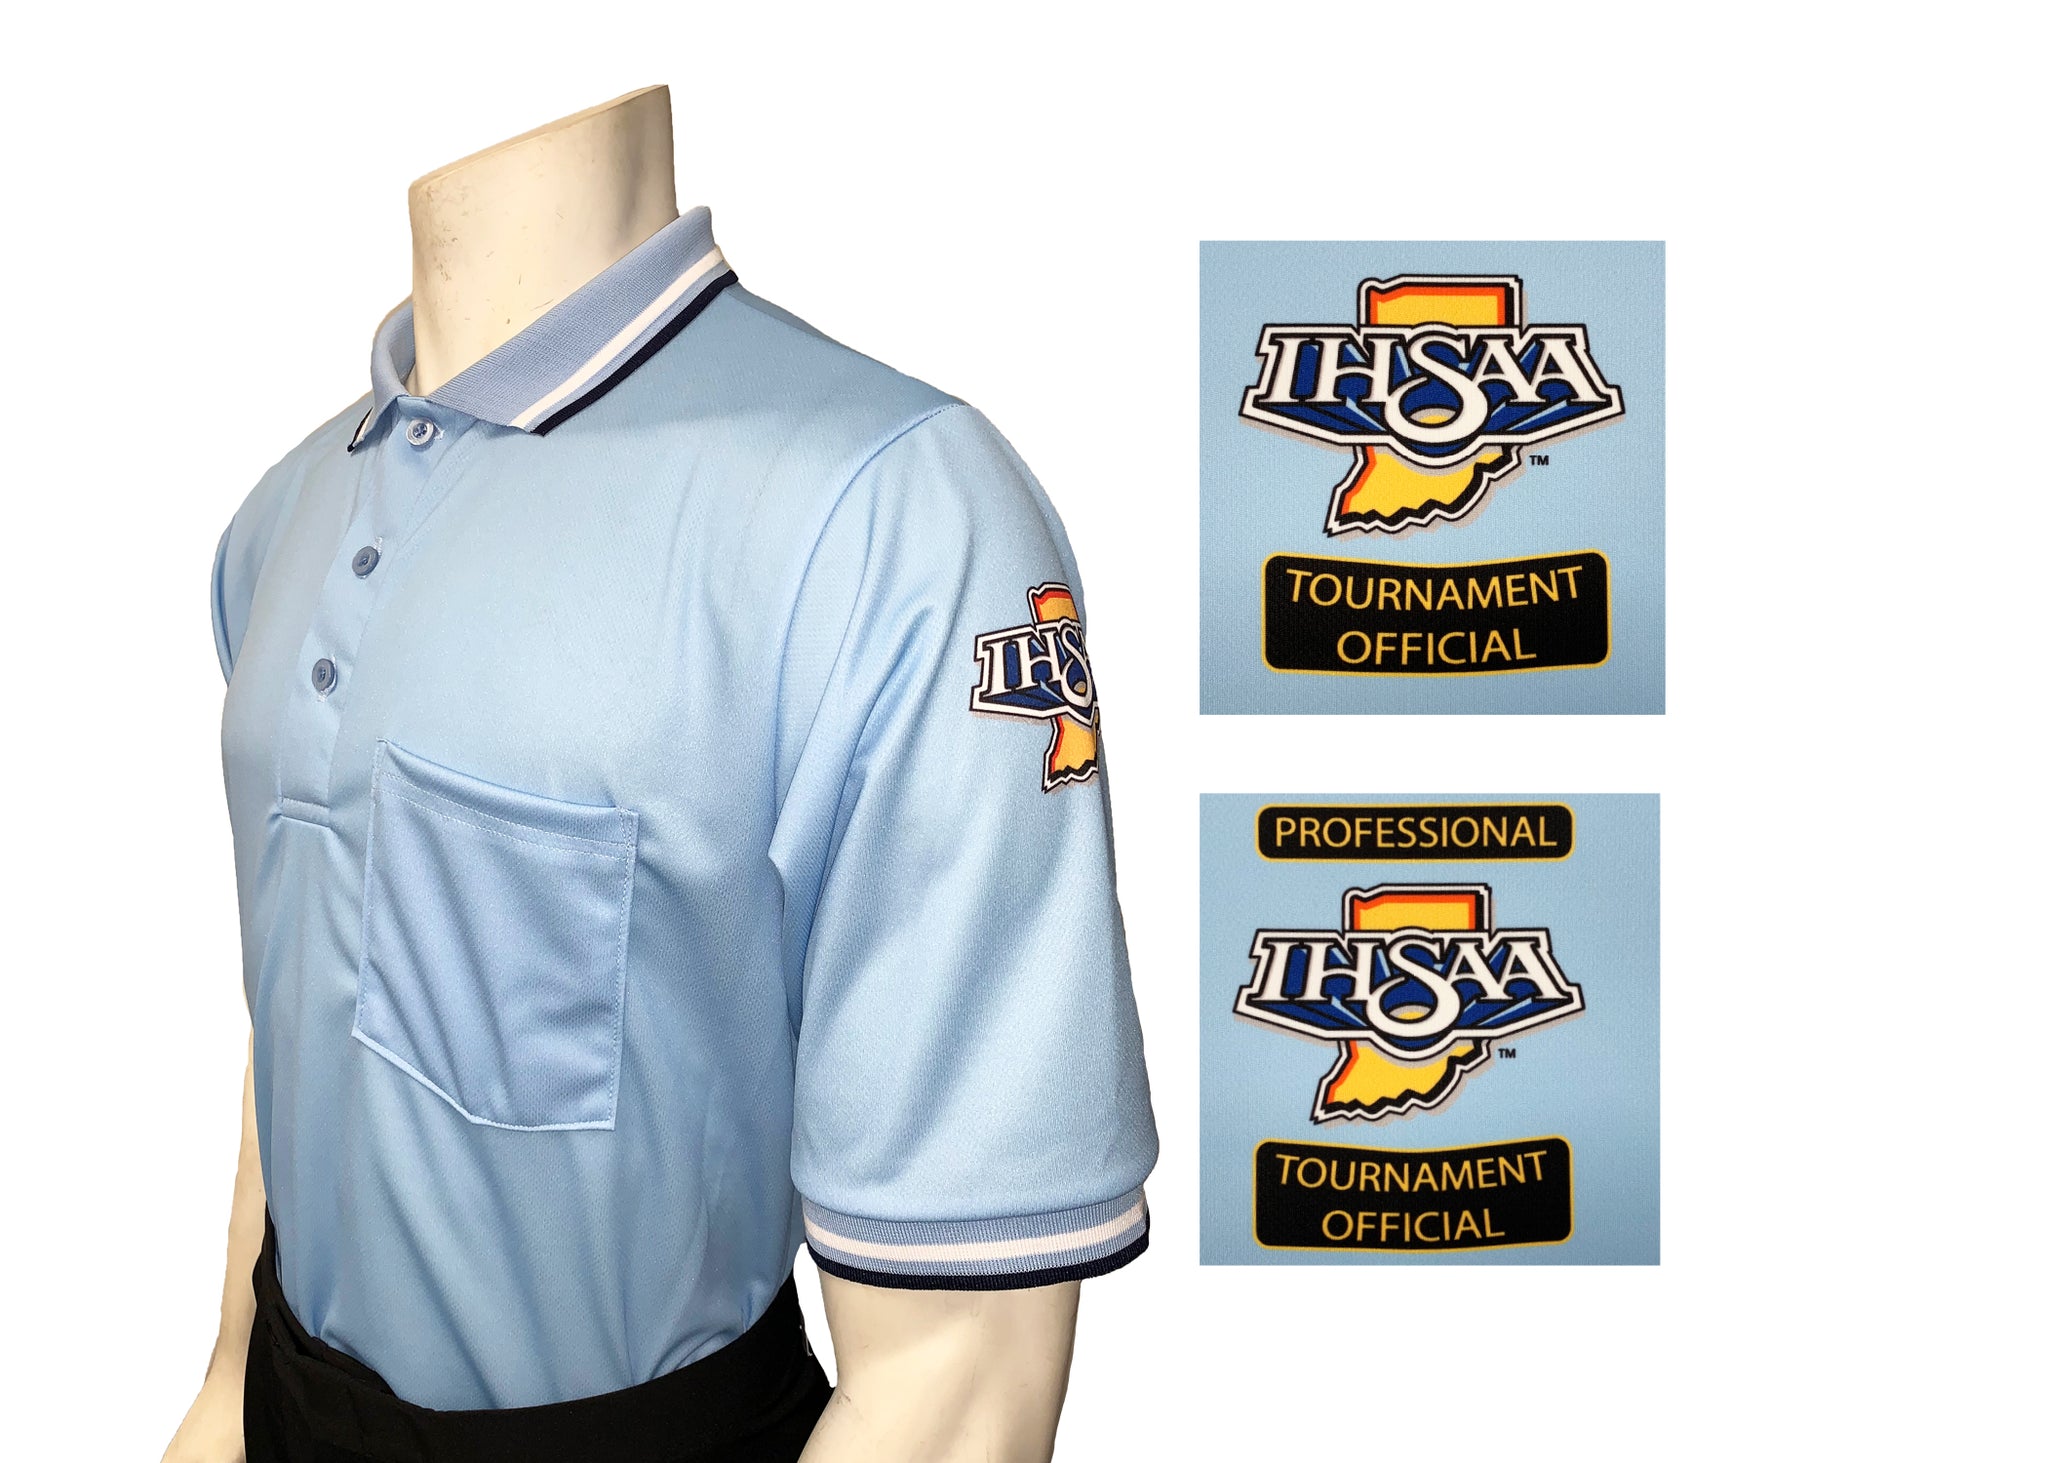 USA300IN-PB - Smitty "Made in USA" - IHSAA Short Sleeve Powder Blue Umpire Shirt